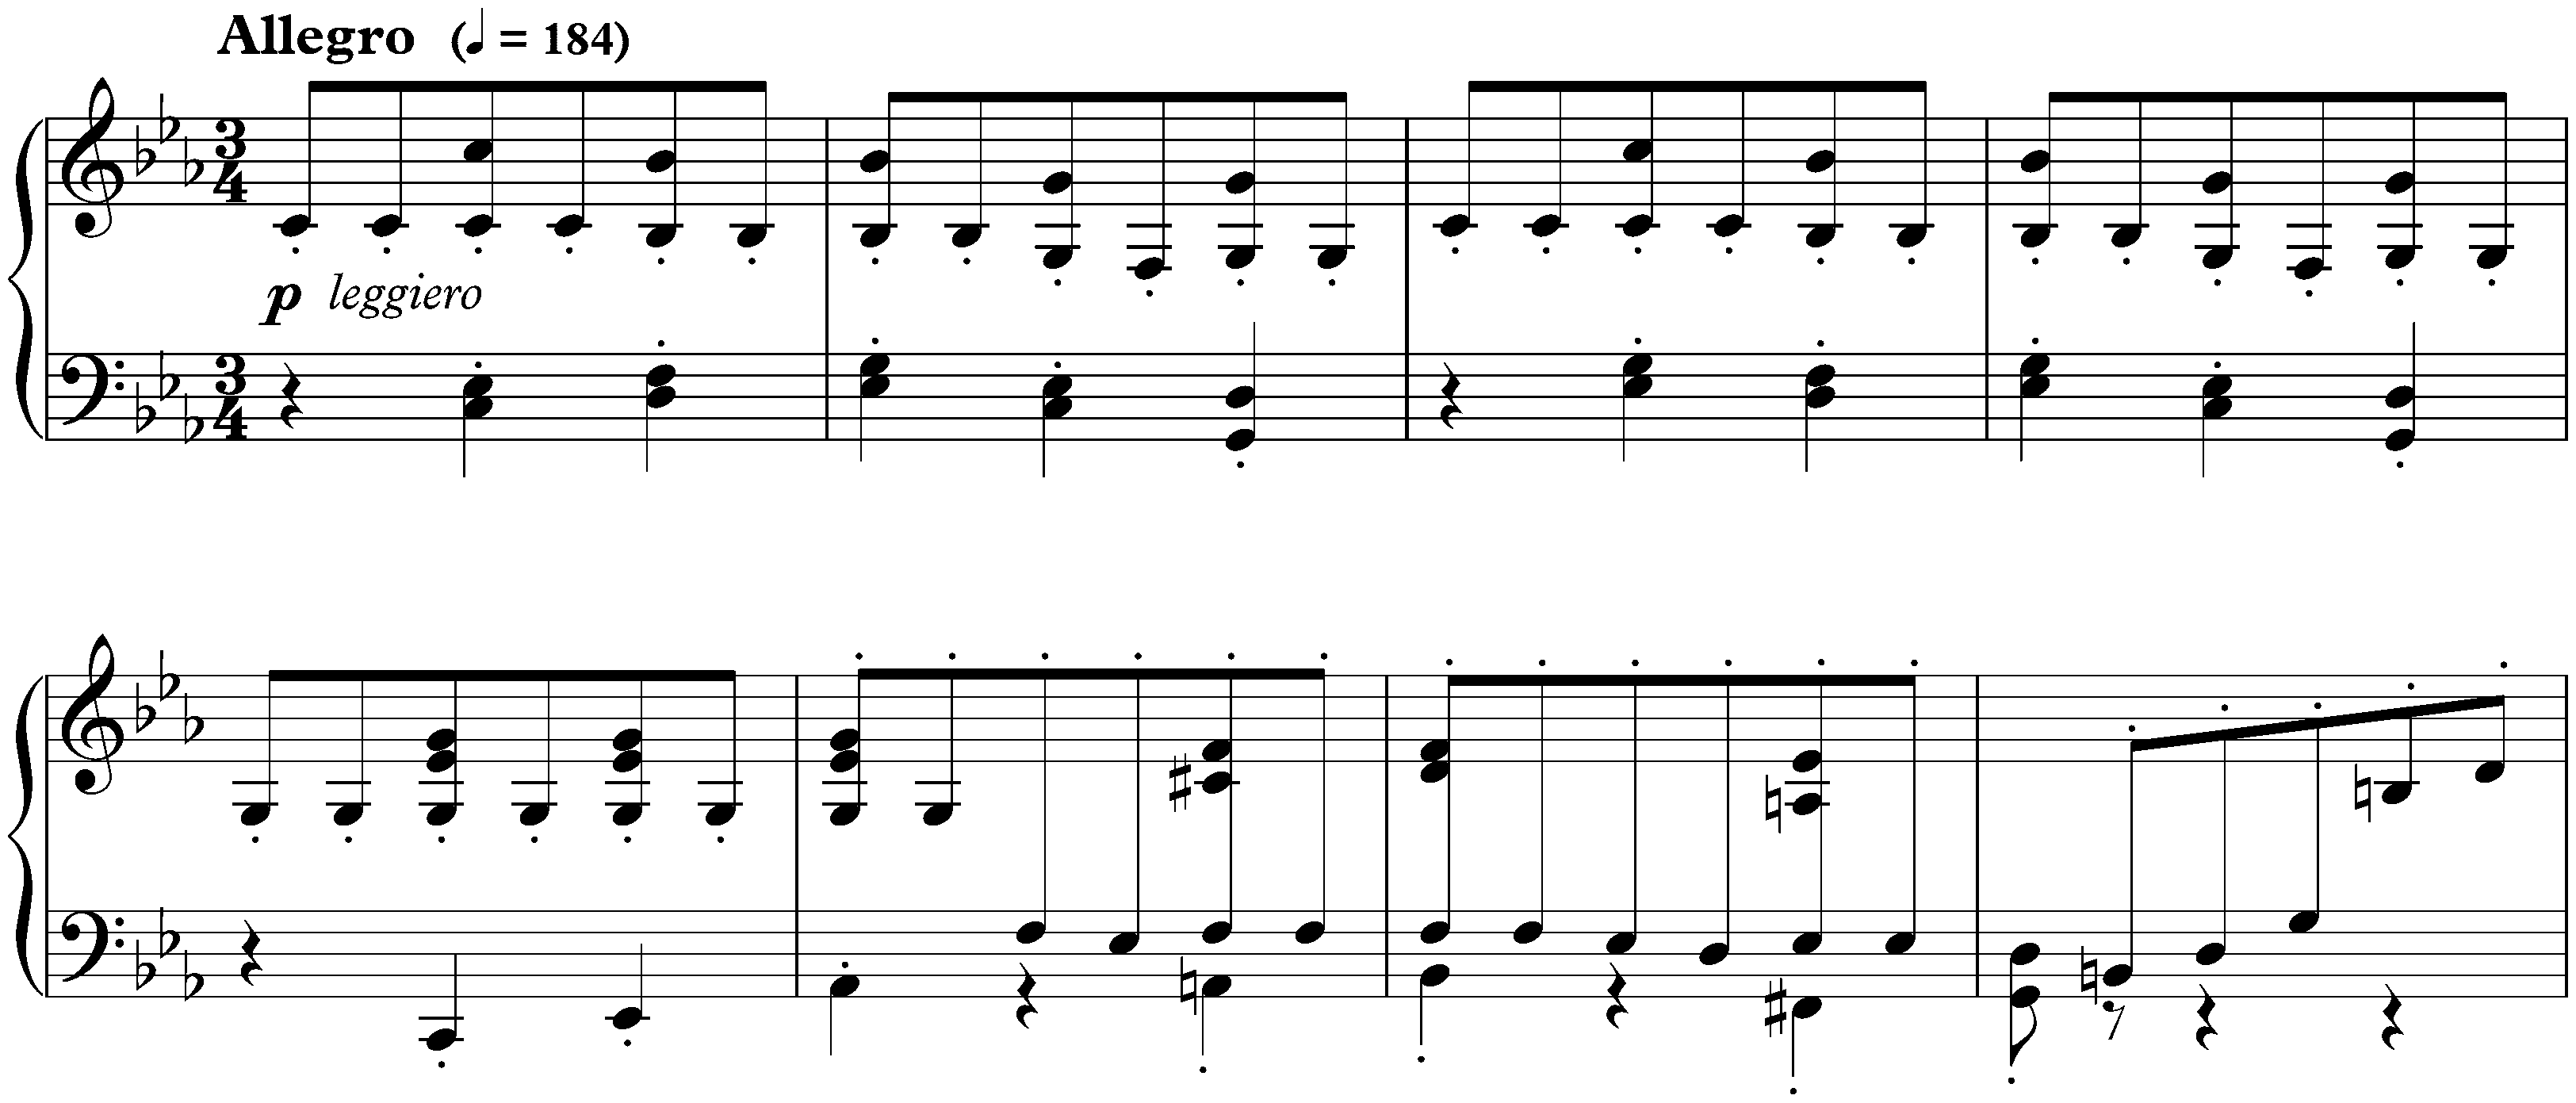 Neuf Préludes, op. 103; 8. C minor